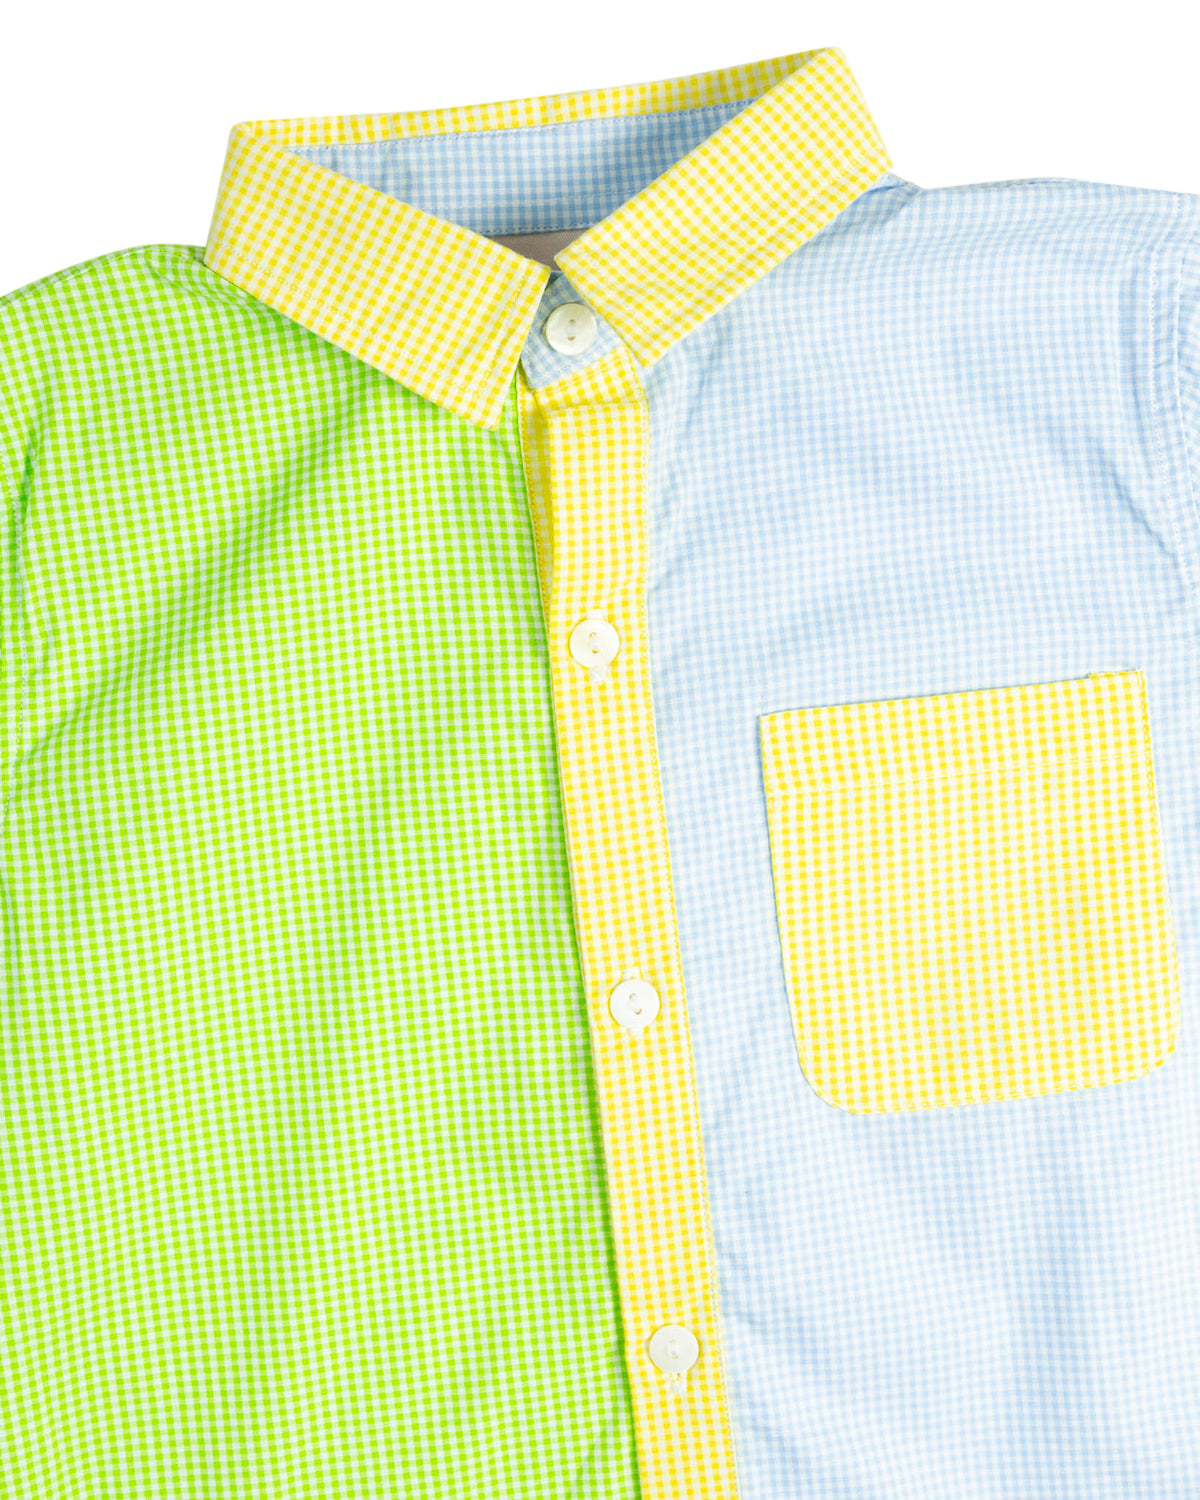 Colorful Seersucker Button Down Shirt